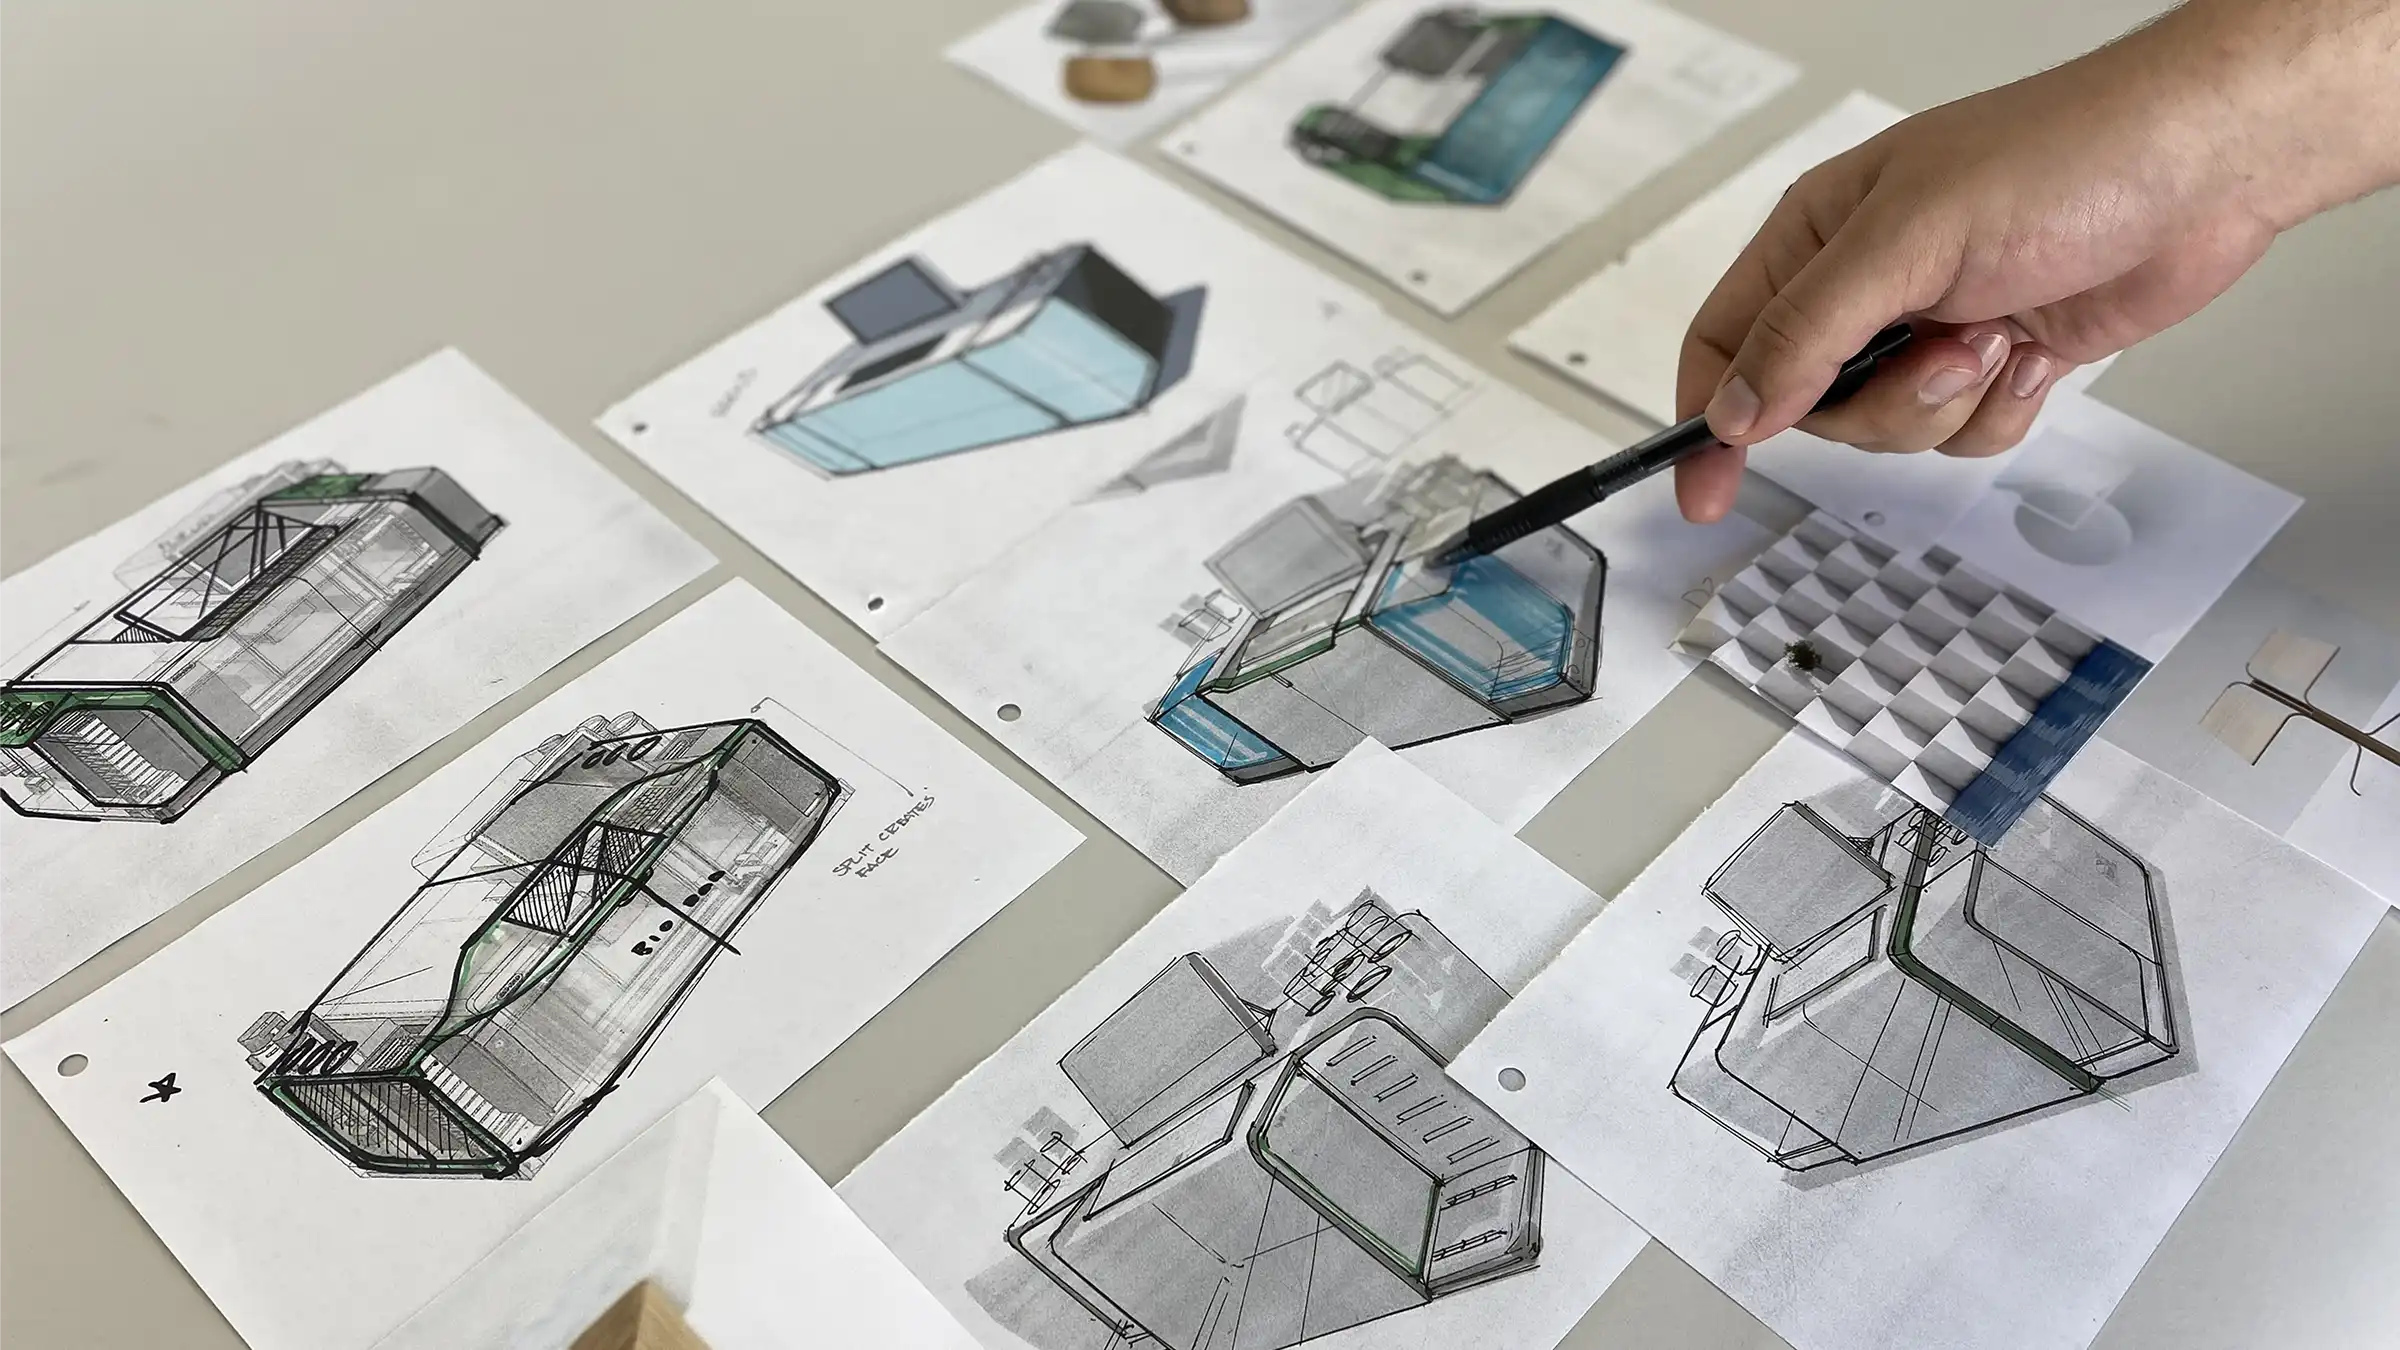 Designer evaluating concept sketches for a biotech instrument